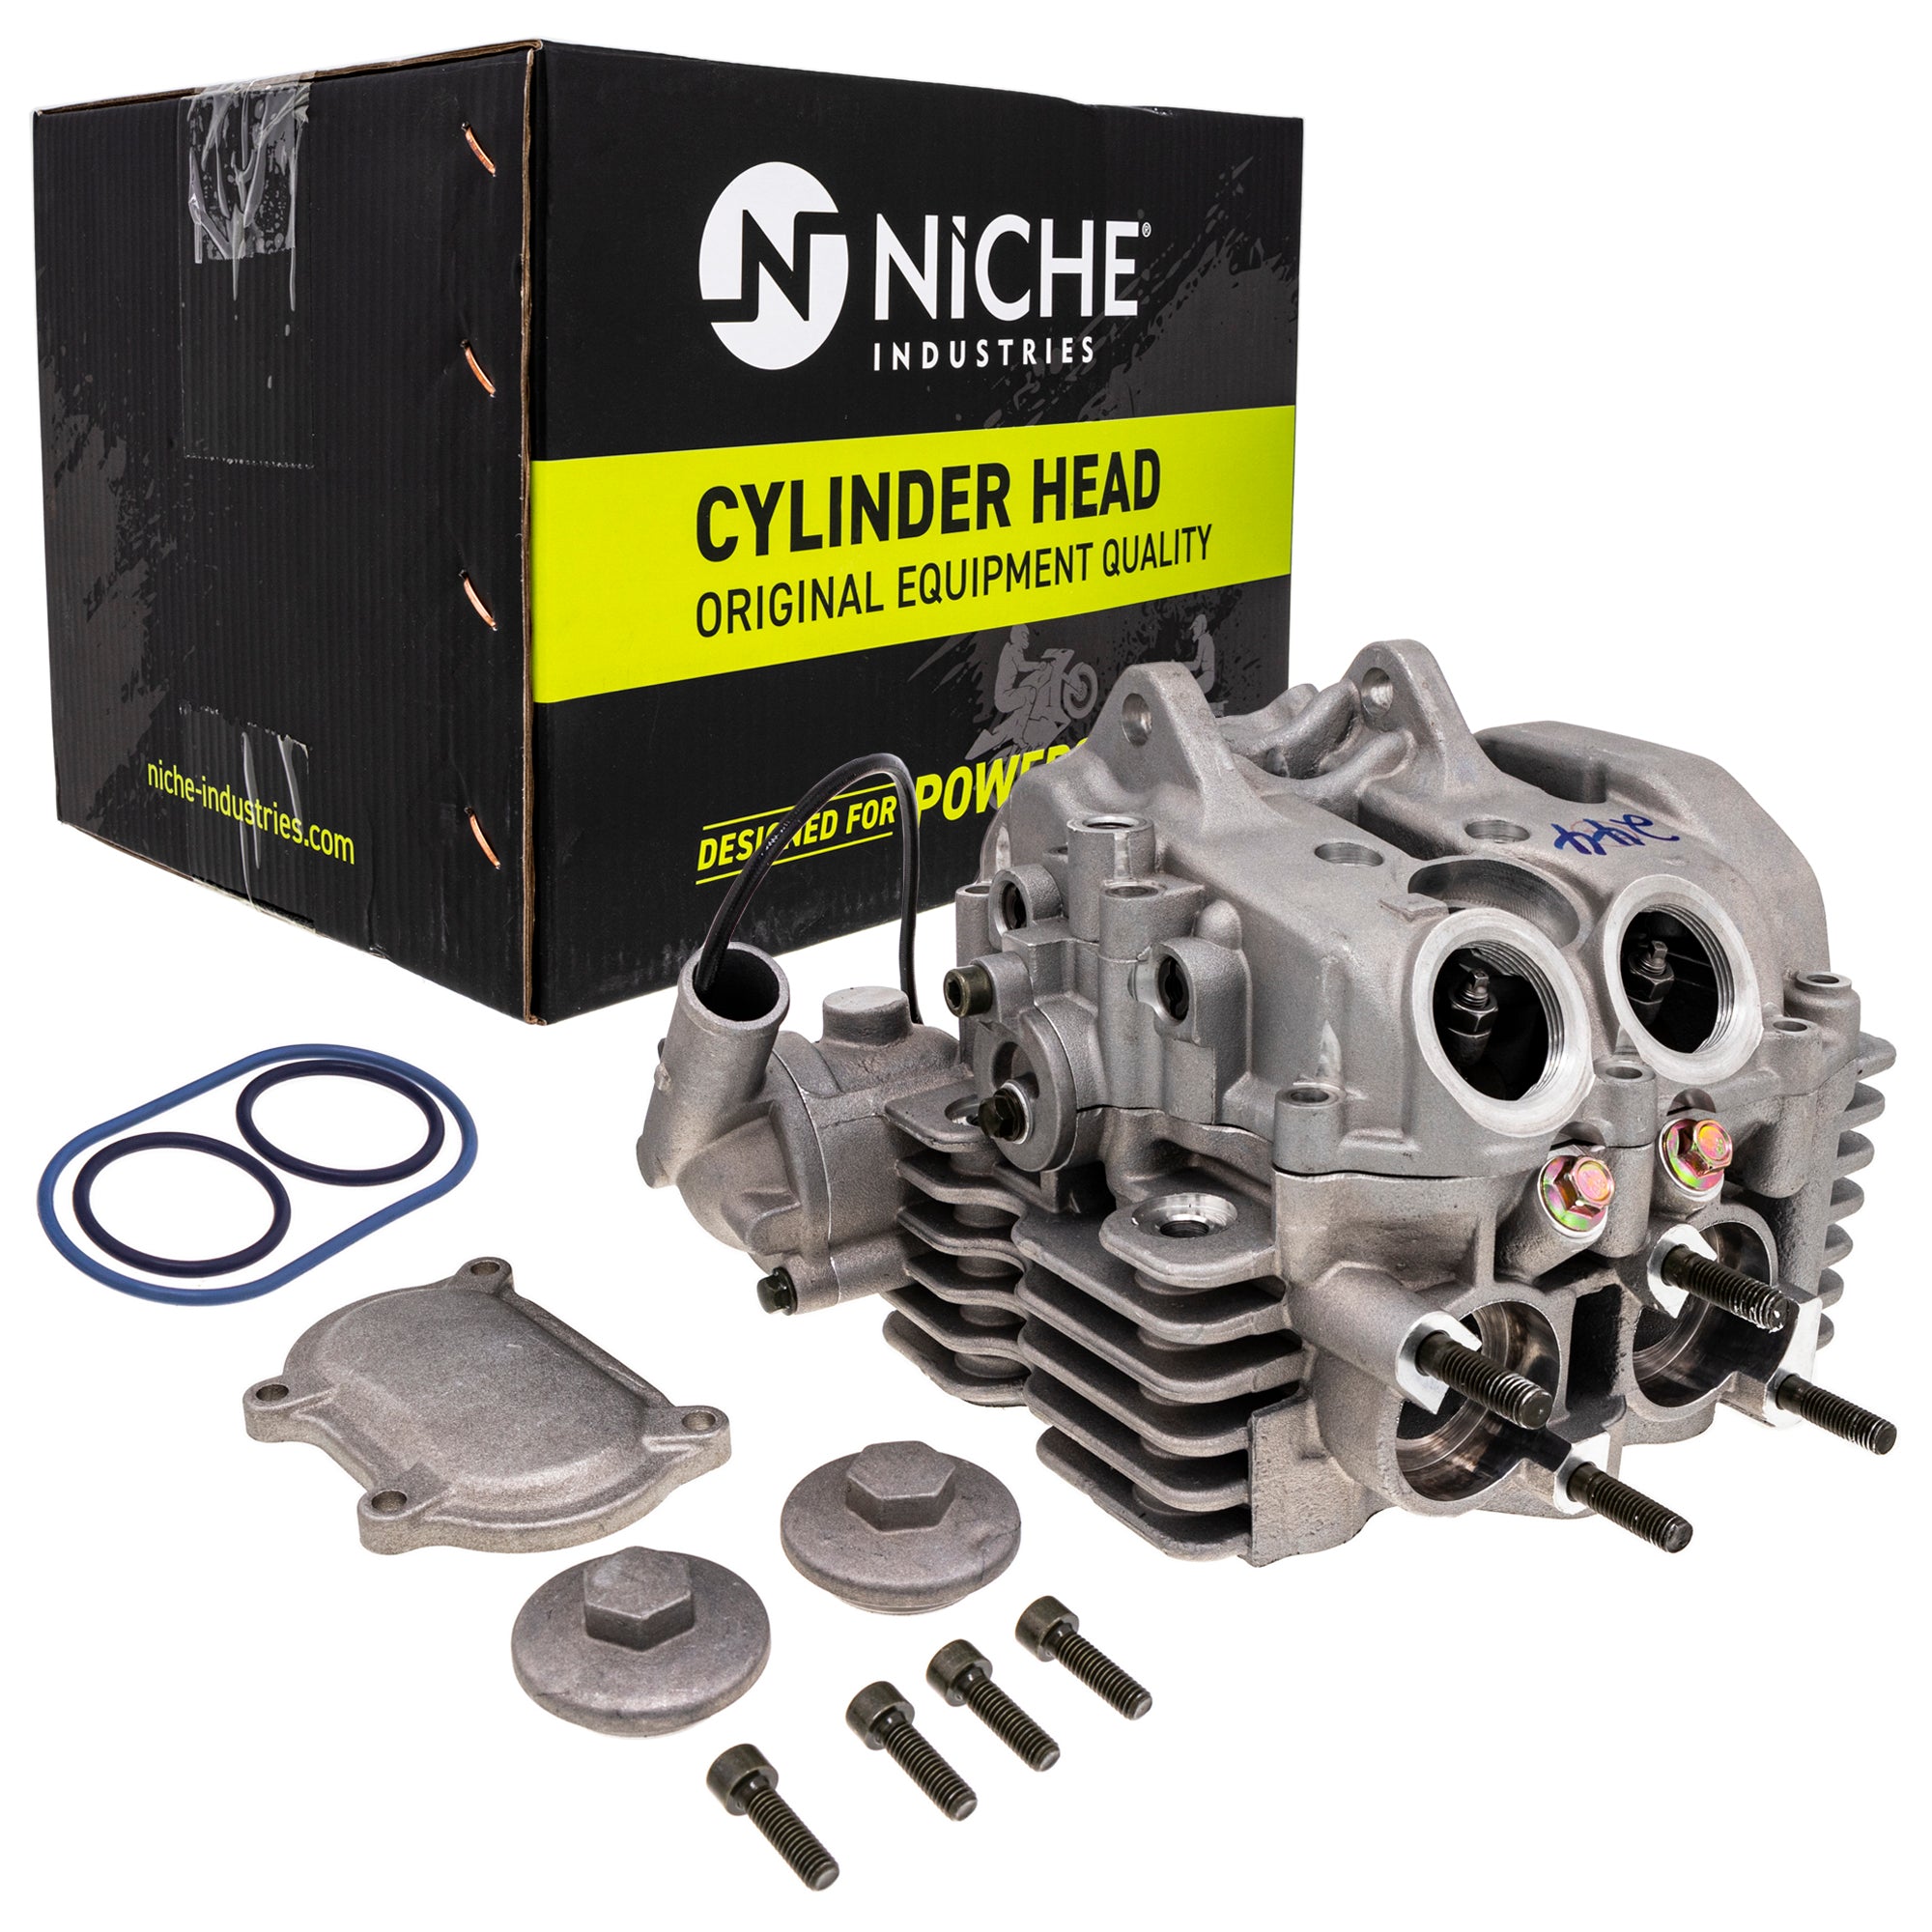 NICHE MK1001389 Cylinder Head Kit for Yamaha Rhino Grizzly